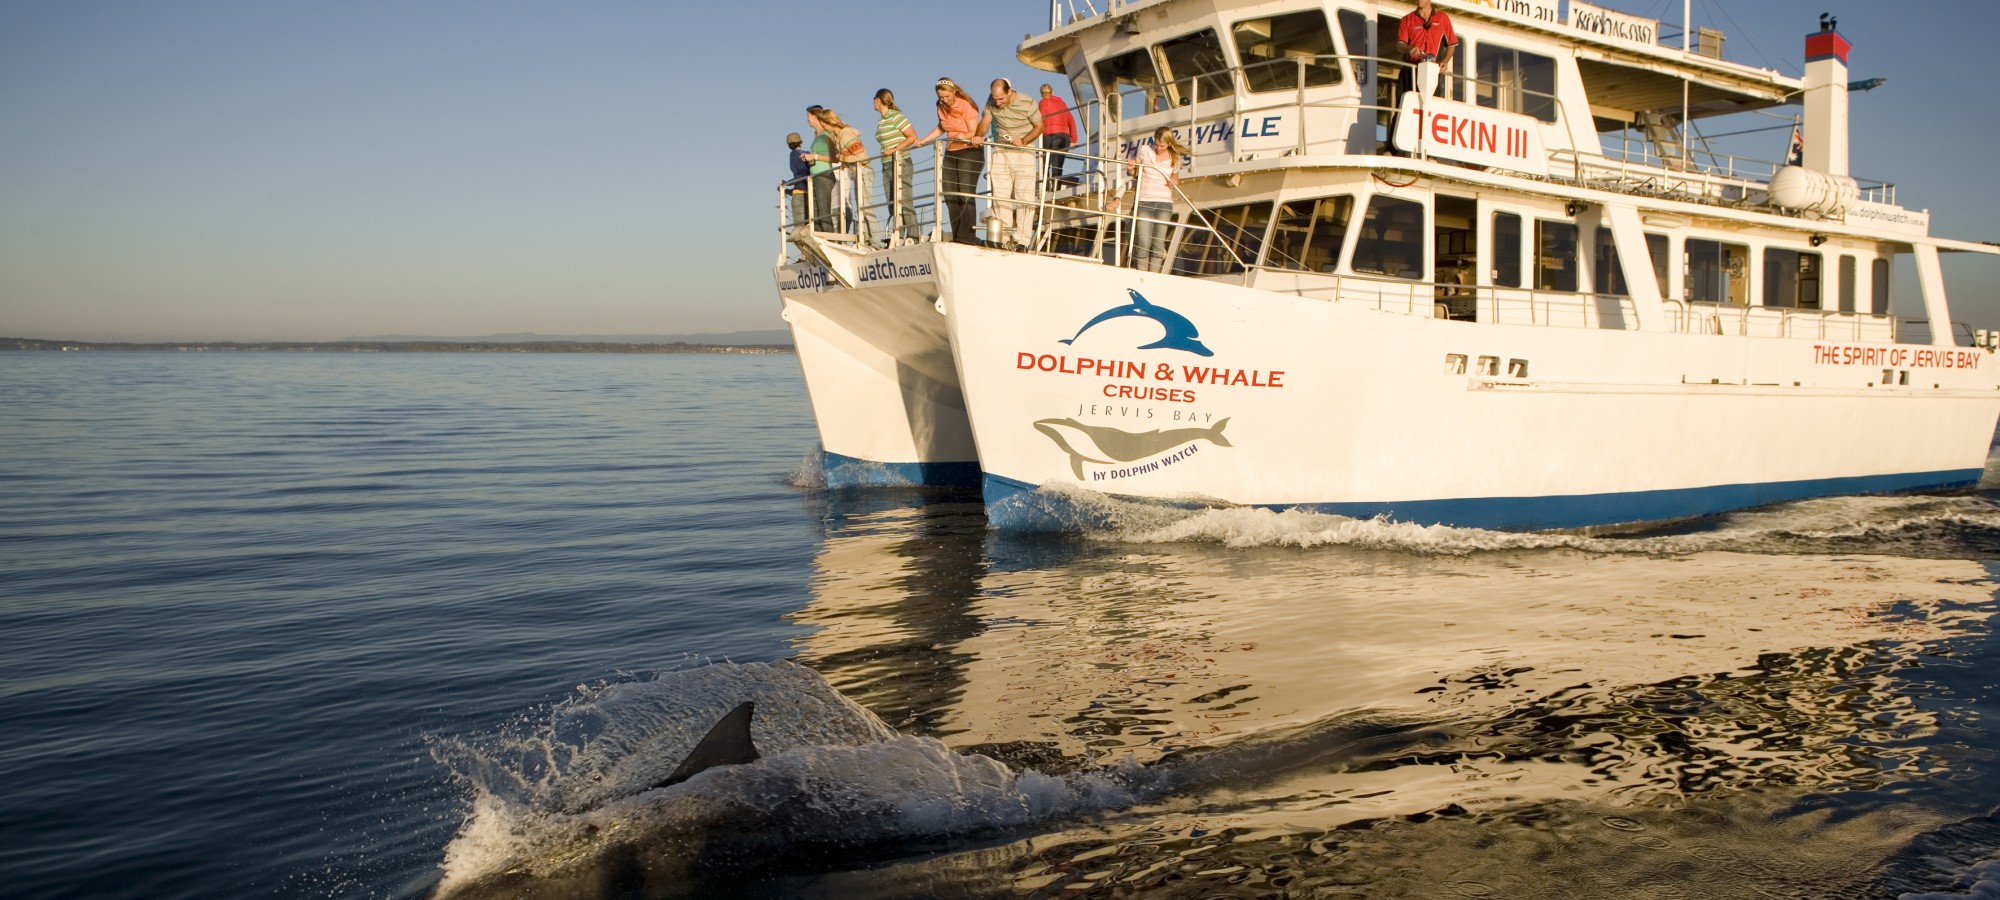 Jervis Bay - Dolphin Watch Cruise - Tekkin III